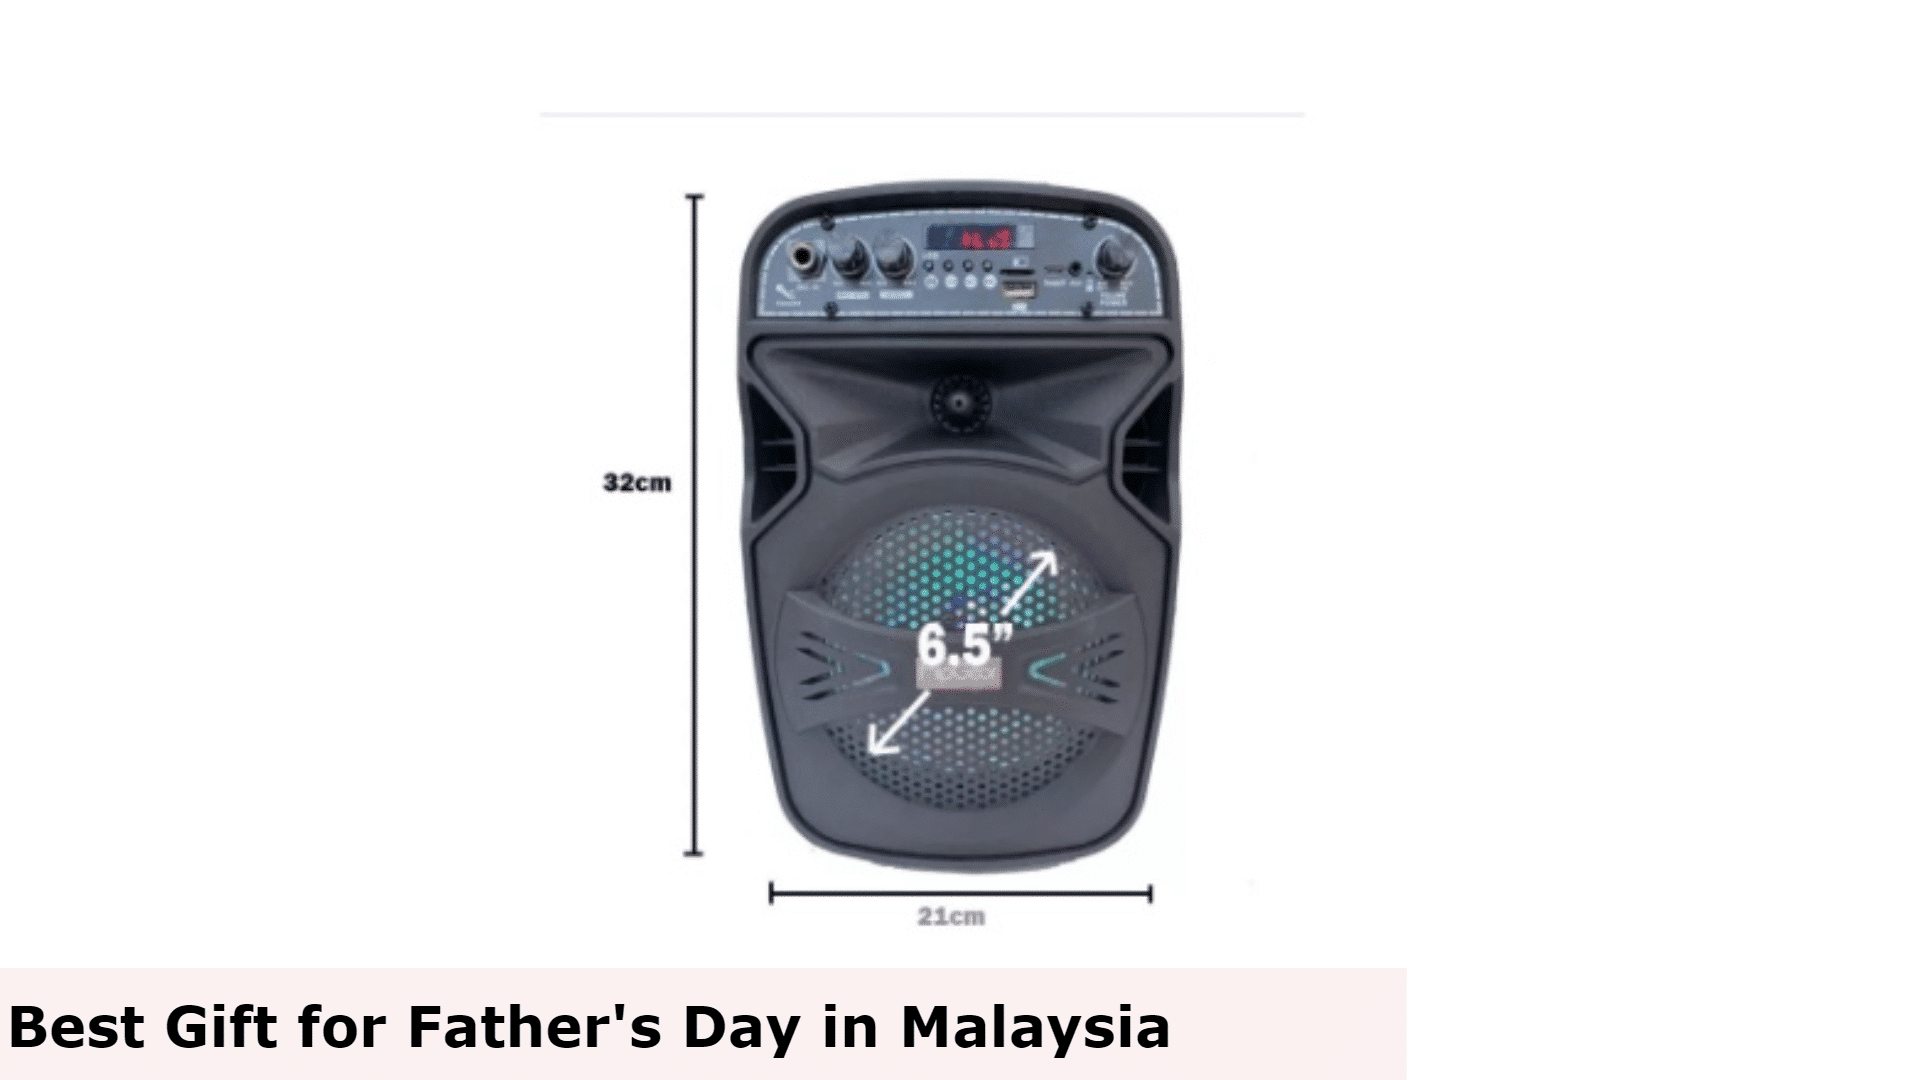 Pembesar Suara Karaoke - Hadiah Terbaik untuk Hari Bapa di Malaysia, Hadiah Terbaik untuk Hari Bapa Malaysia, Hadiah Hari Bapa Terbaik untuk Ayah, Apa yang ayah mahukan untuk Hari Bapa di Malaysia?, Apakah hadiah murah yang bagus untuk Hari Bapa di Malaysia?, Adakah anda memberi hadiah pada Hari Bapa di Malaysia?, hadiah untuk ayah yang tidak mahu apa-apa, idea hadiah hari bapa yang ringkas, idea hadiah hari bapa 2022, hadiah hari bapa' idea semasa covid, idea hadiah hari bapa daripada anak perempuan, hadiah unik untuk ayah, idea hadiah hari bapa daripada isteri, hadiah hari bapa daripada anak lelaki, Apa yang dibeli untuk ayah yang tidak mahu apa-apa?, Apa yang perlu ayah yang sukar dibeli?, Apa yang perlu saya dapatkan ayah saya yang membosankan untuk Krismas?, Hadiah apa yang ayah suka?,